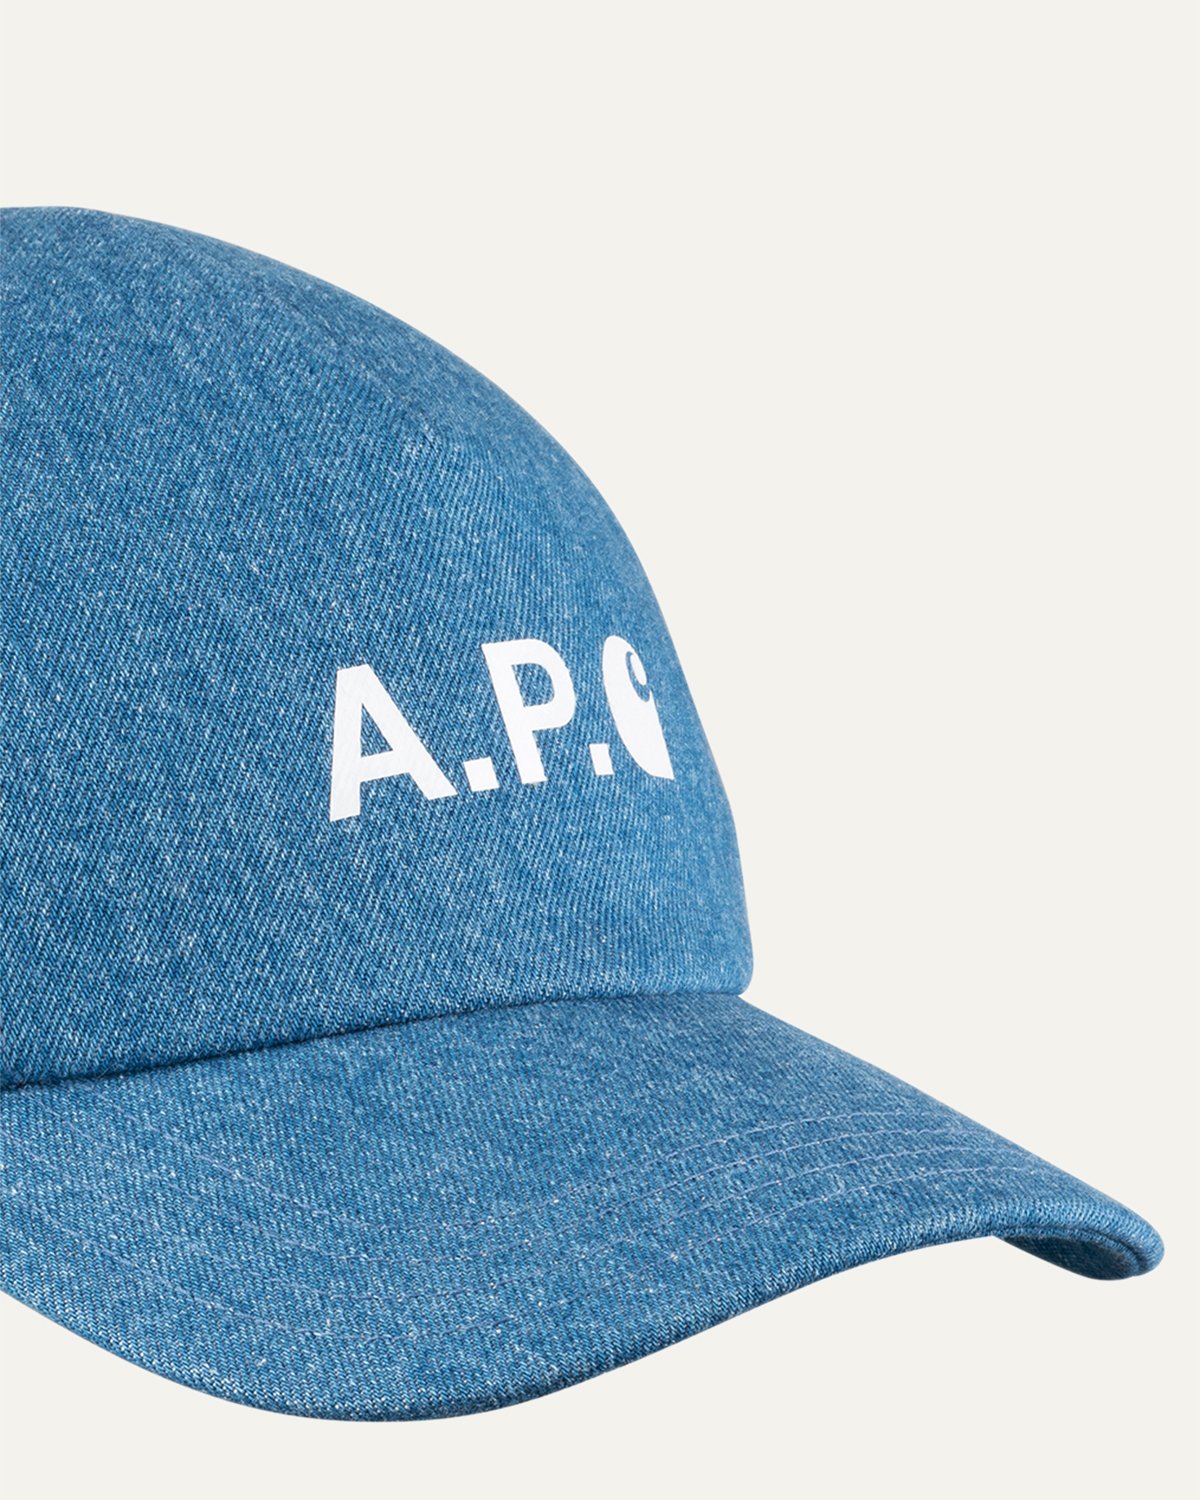 A.P.C. x Carhartt WIP - Cameron Baseball Cap Indigo - Caps - Blue - Image 4